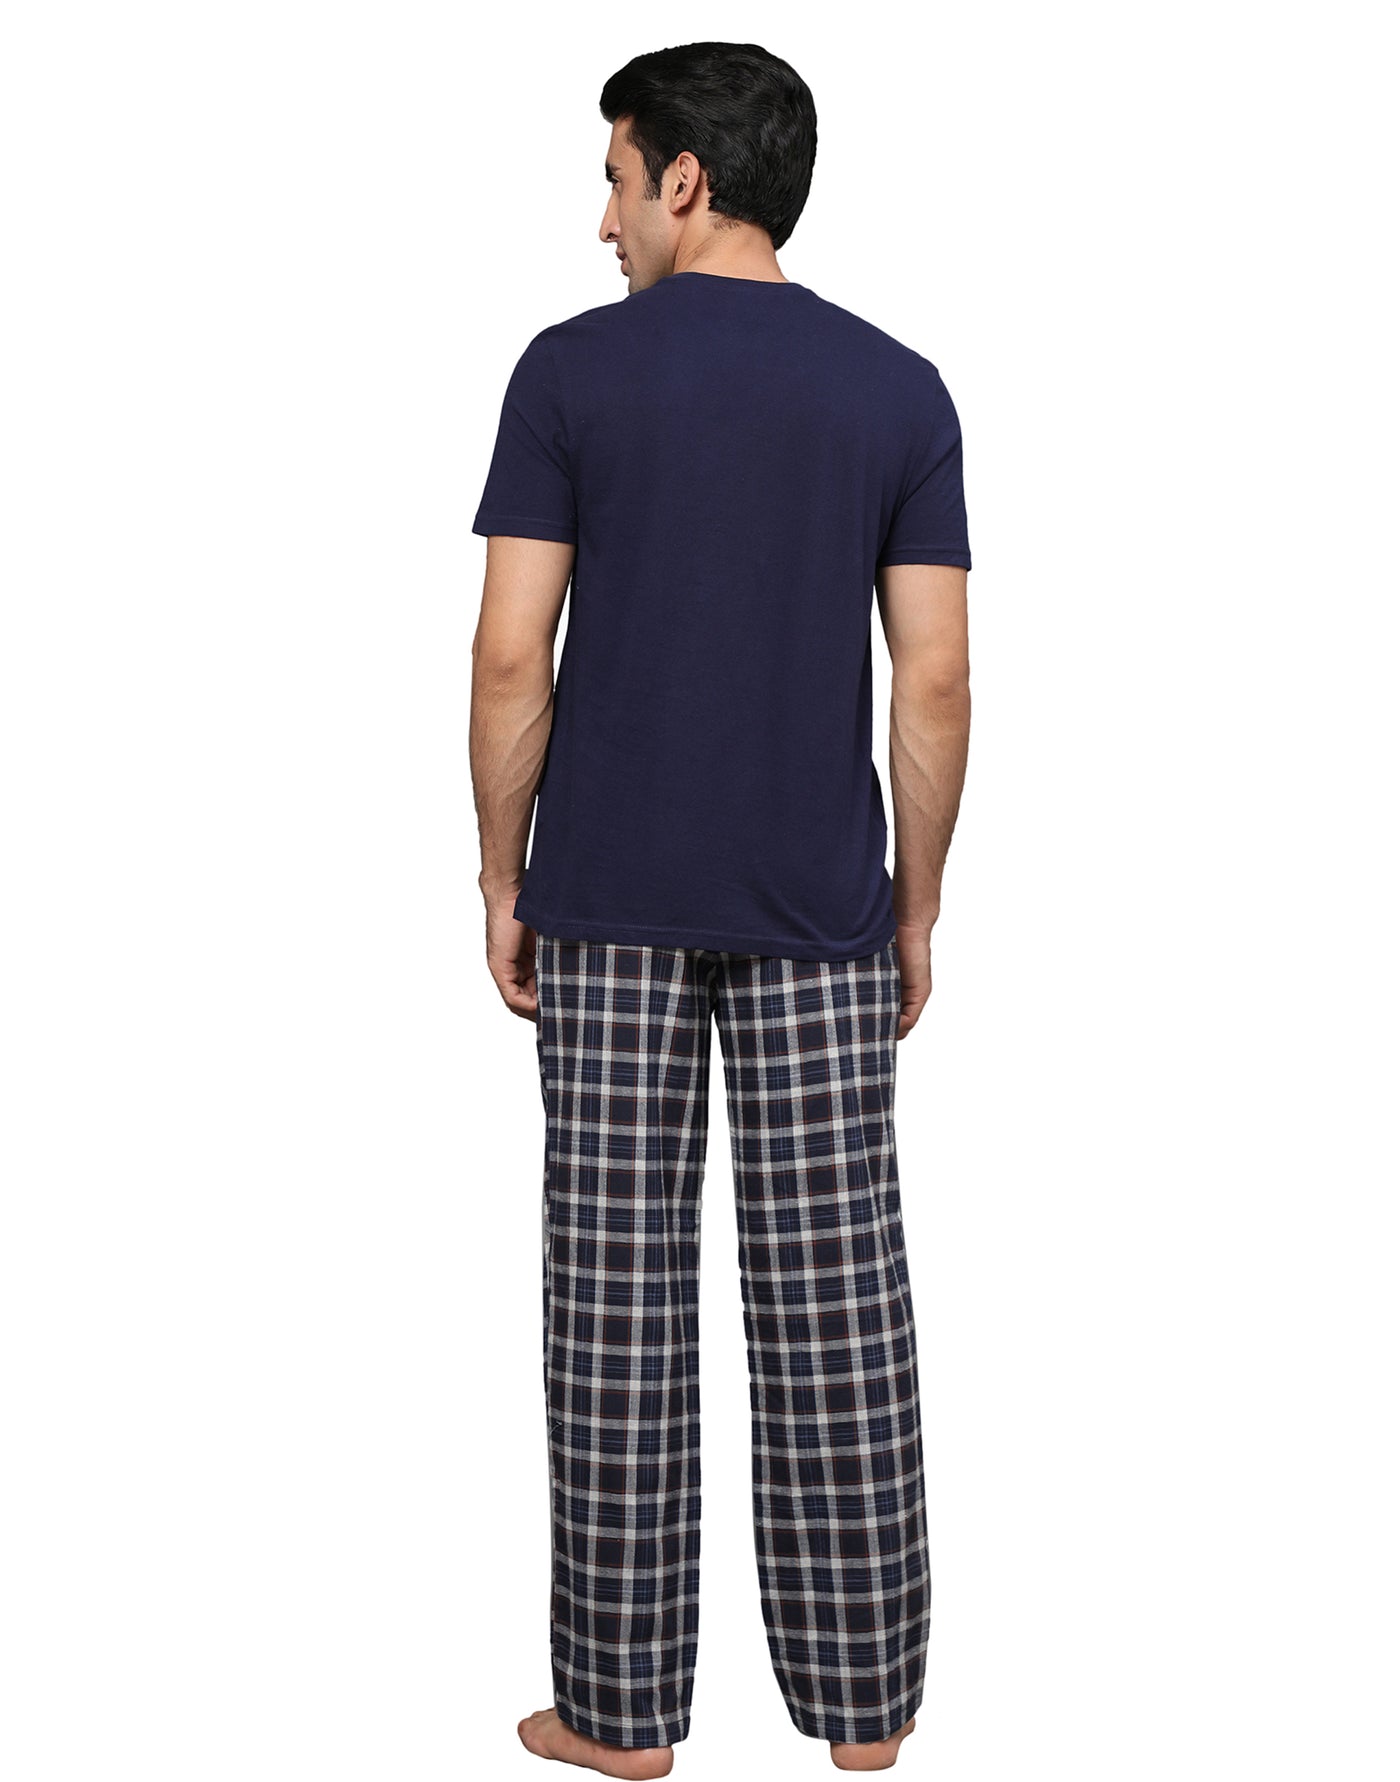 Pyjama Set for Men-Navy & Black Checked